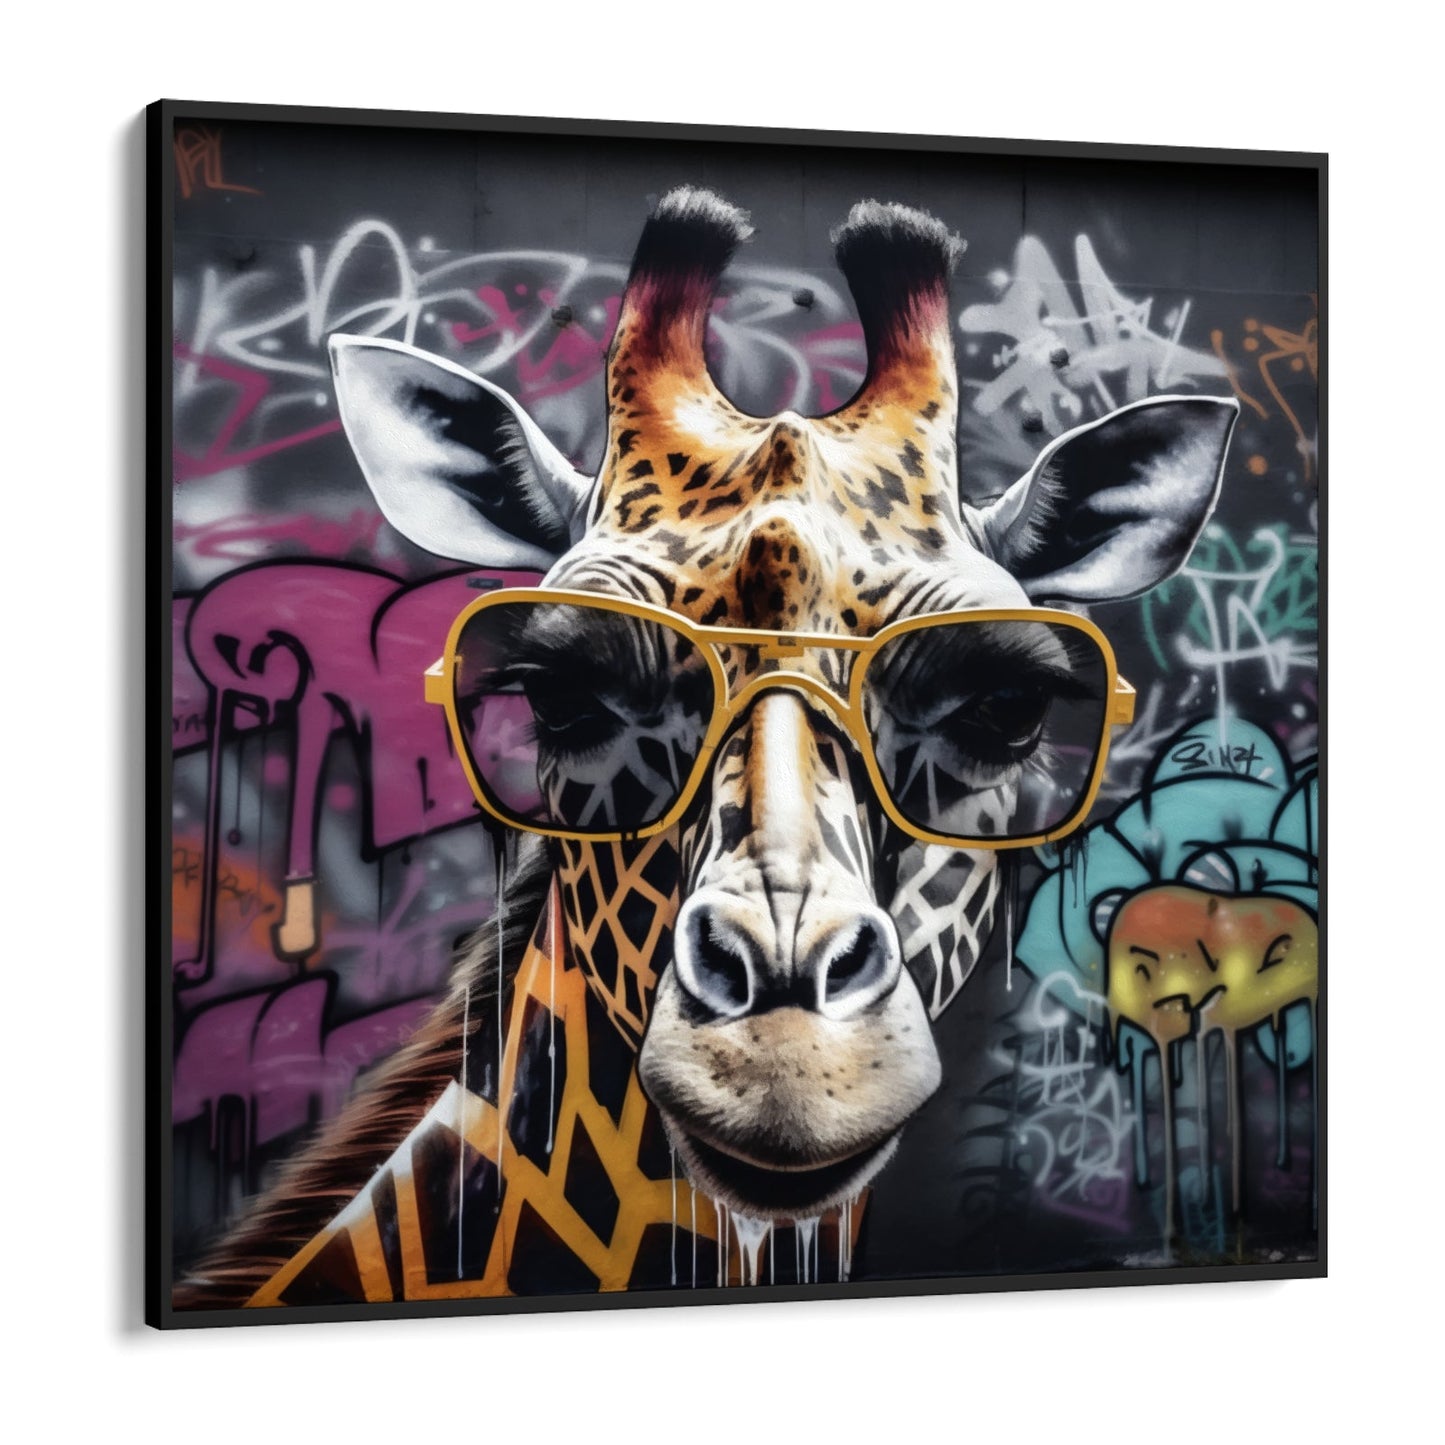 Graffiti-Giraffe